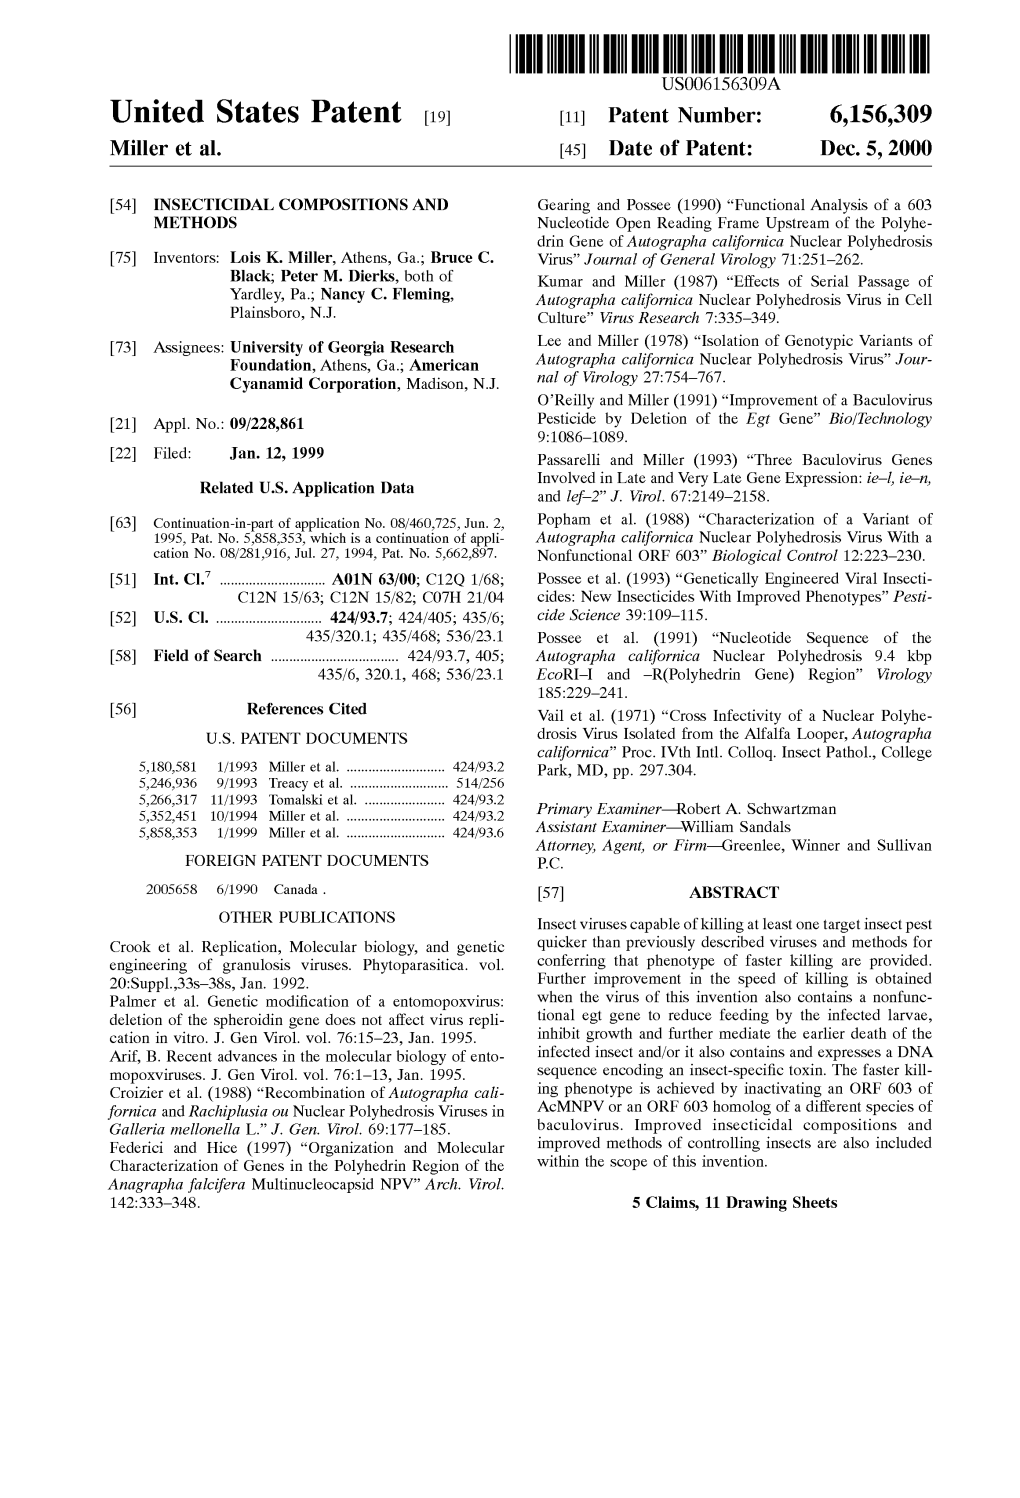 United States Patent (19) 11 Patent Number: 6,156,309 Miller Et Al